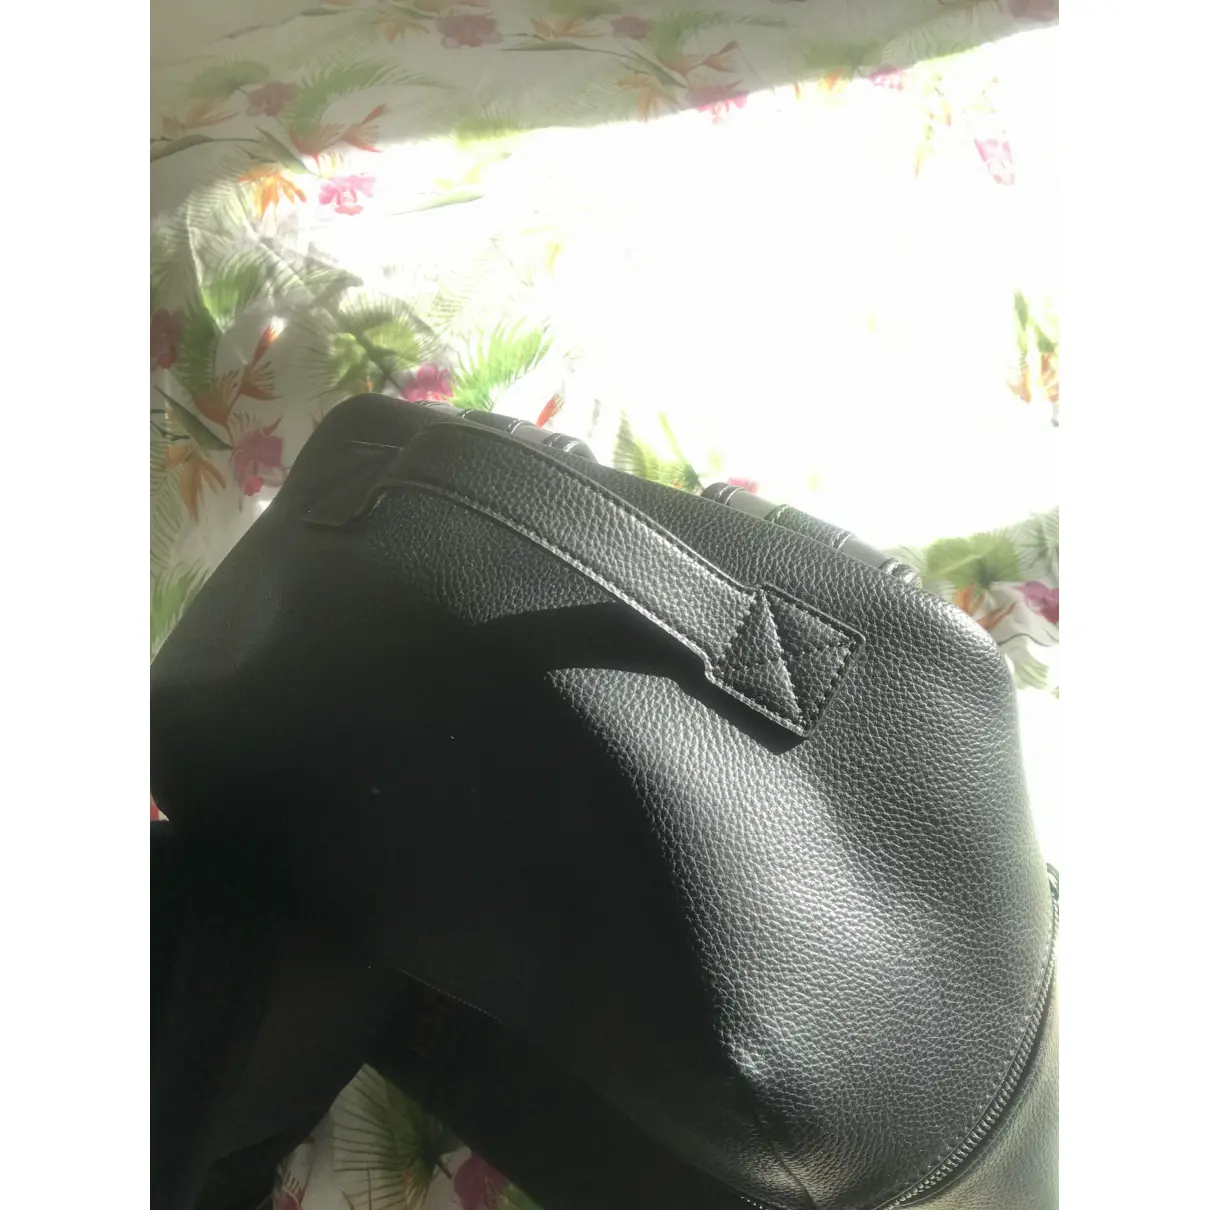 Buy Emporio Armani Leather bag online